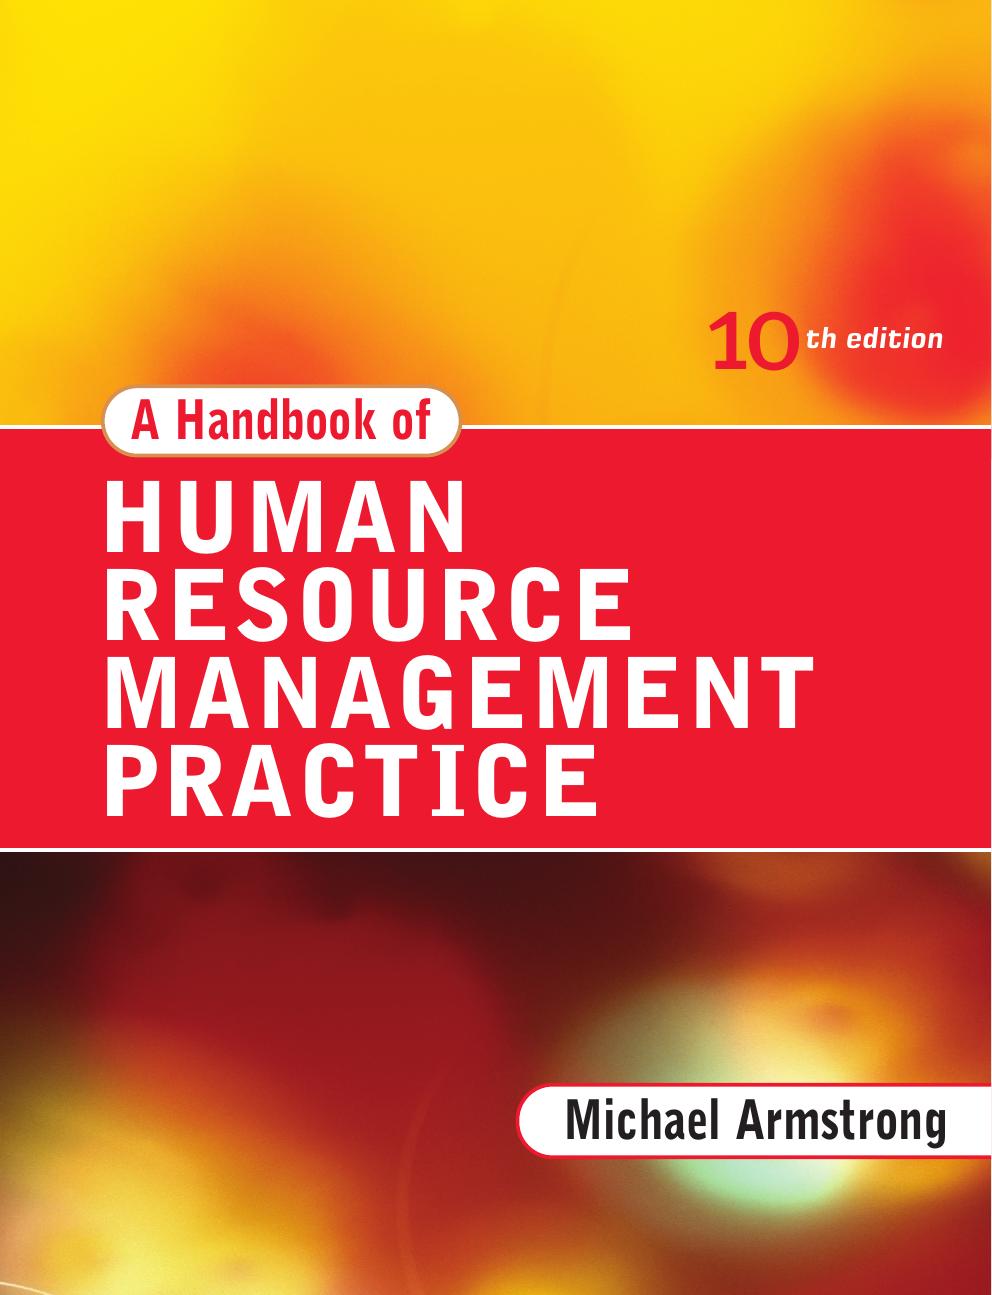 A Handbook of Human Resource Management Practice